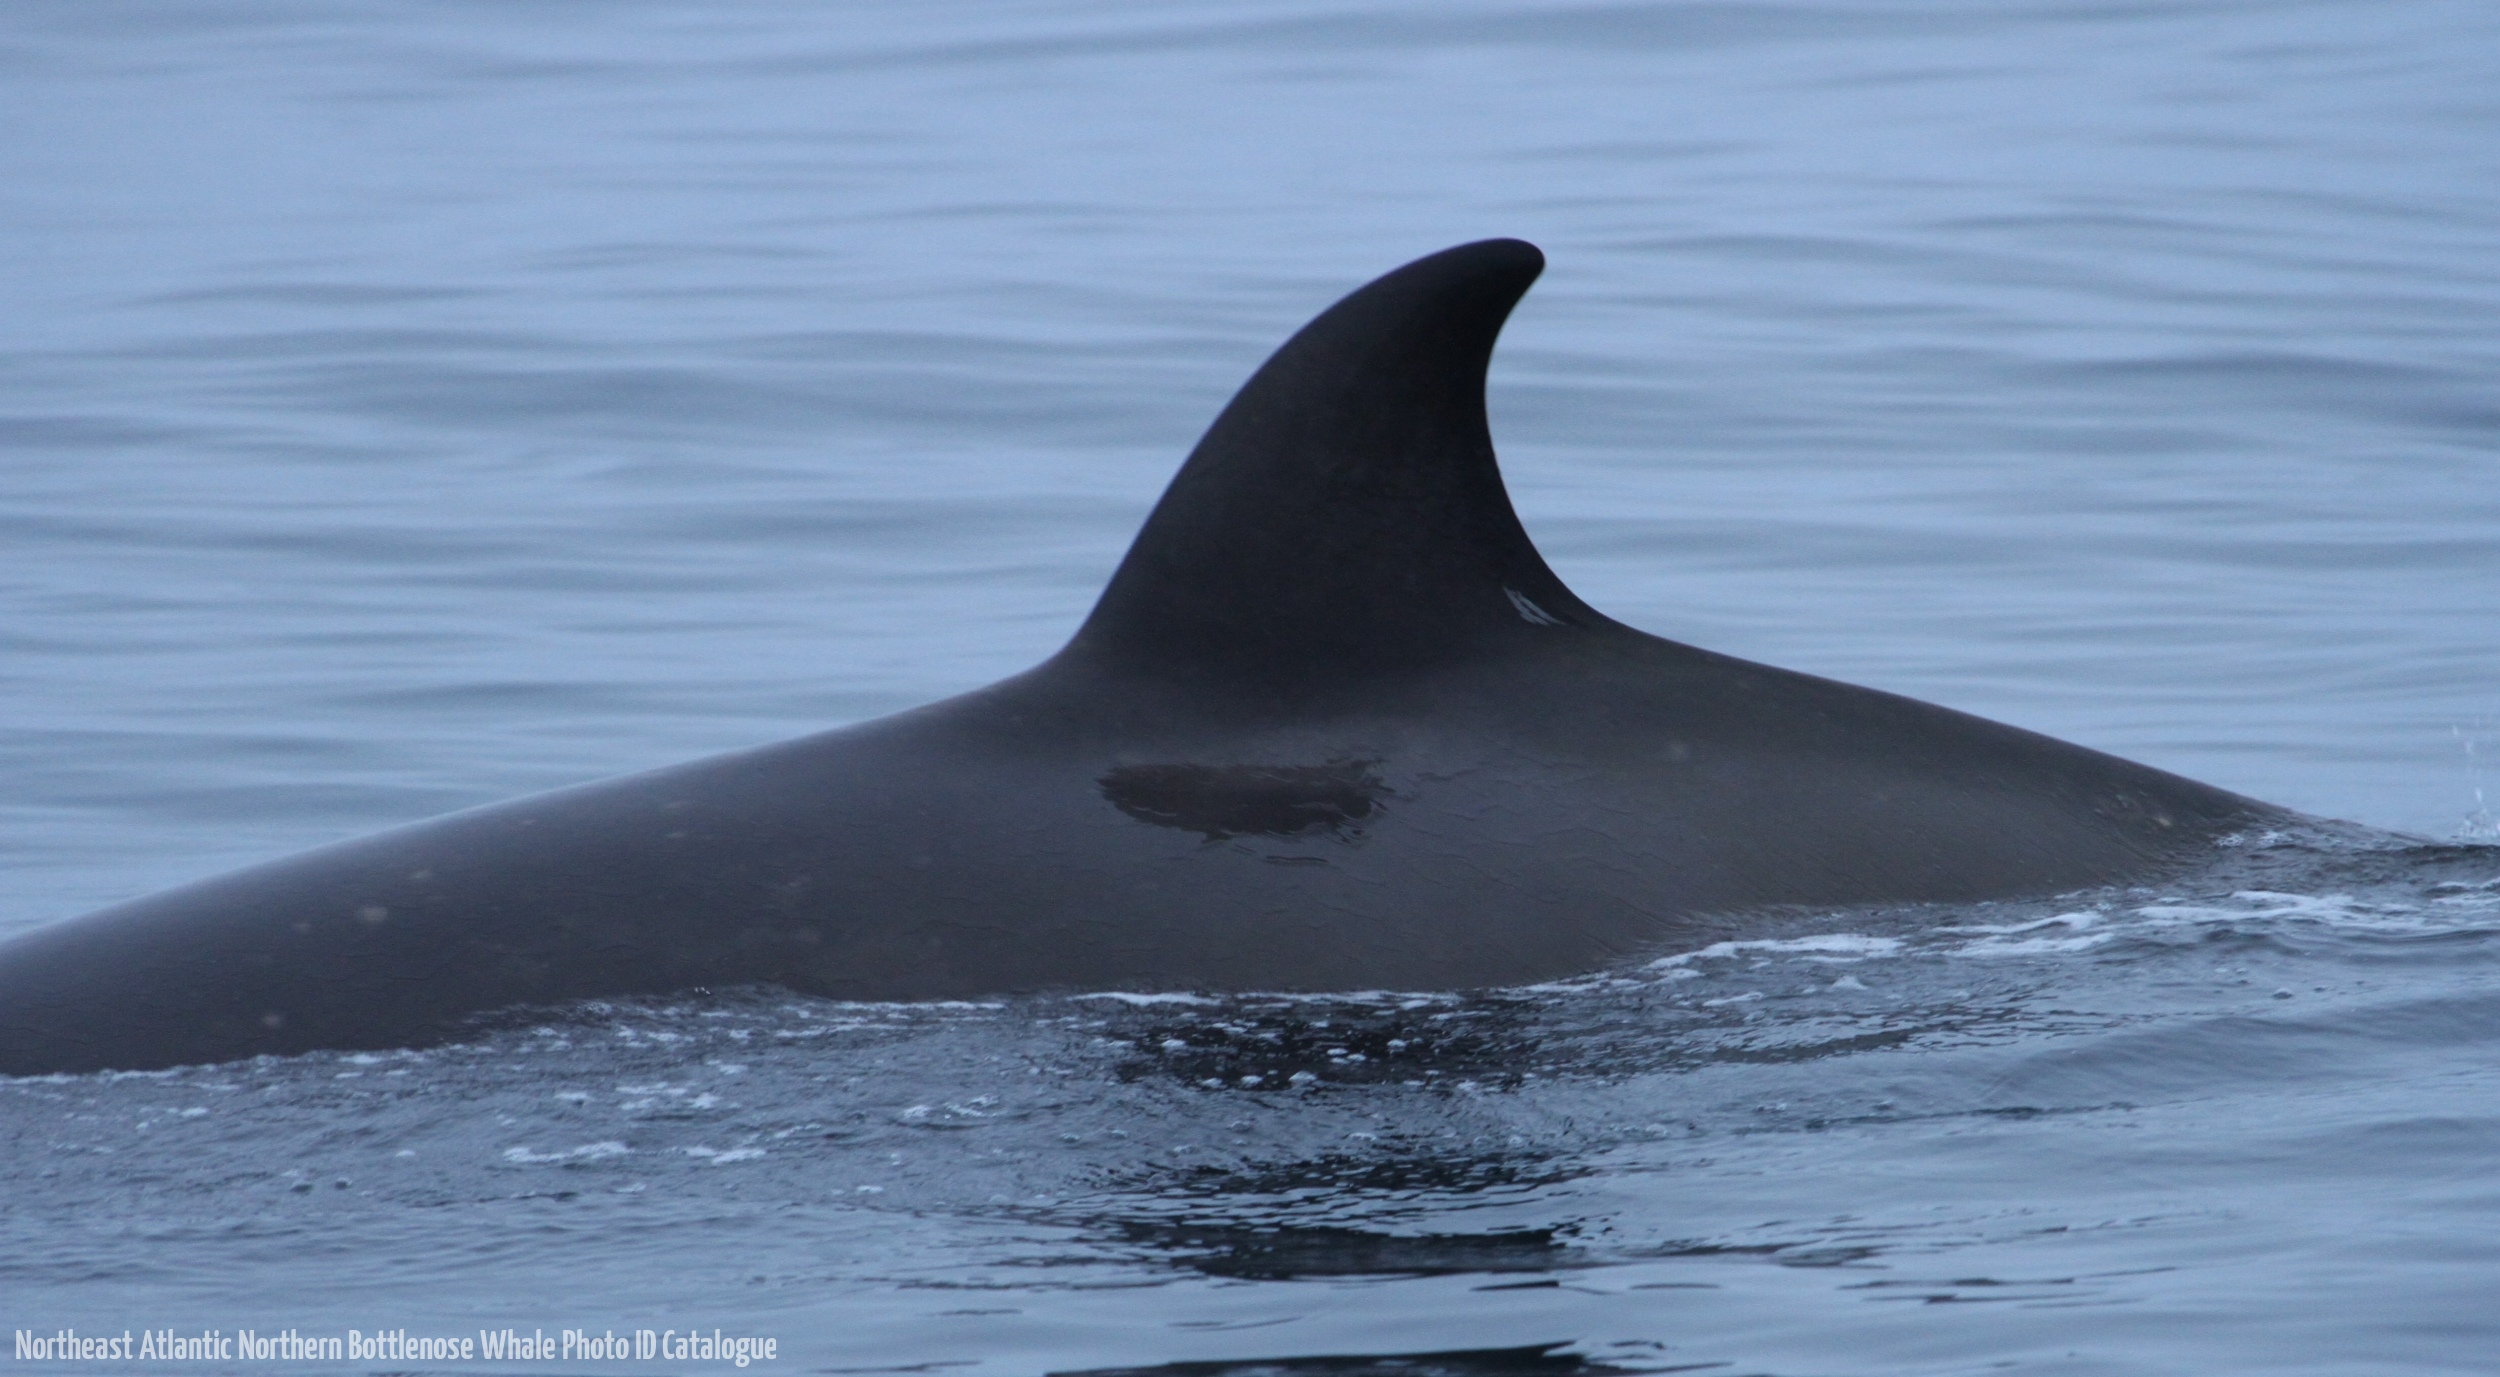 Whale ID: 0011,  Date taken: 01-07-2013,  Photographer: Paul H. Ensor